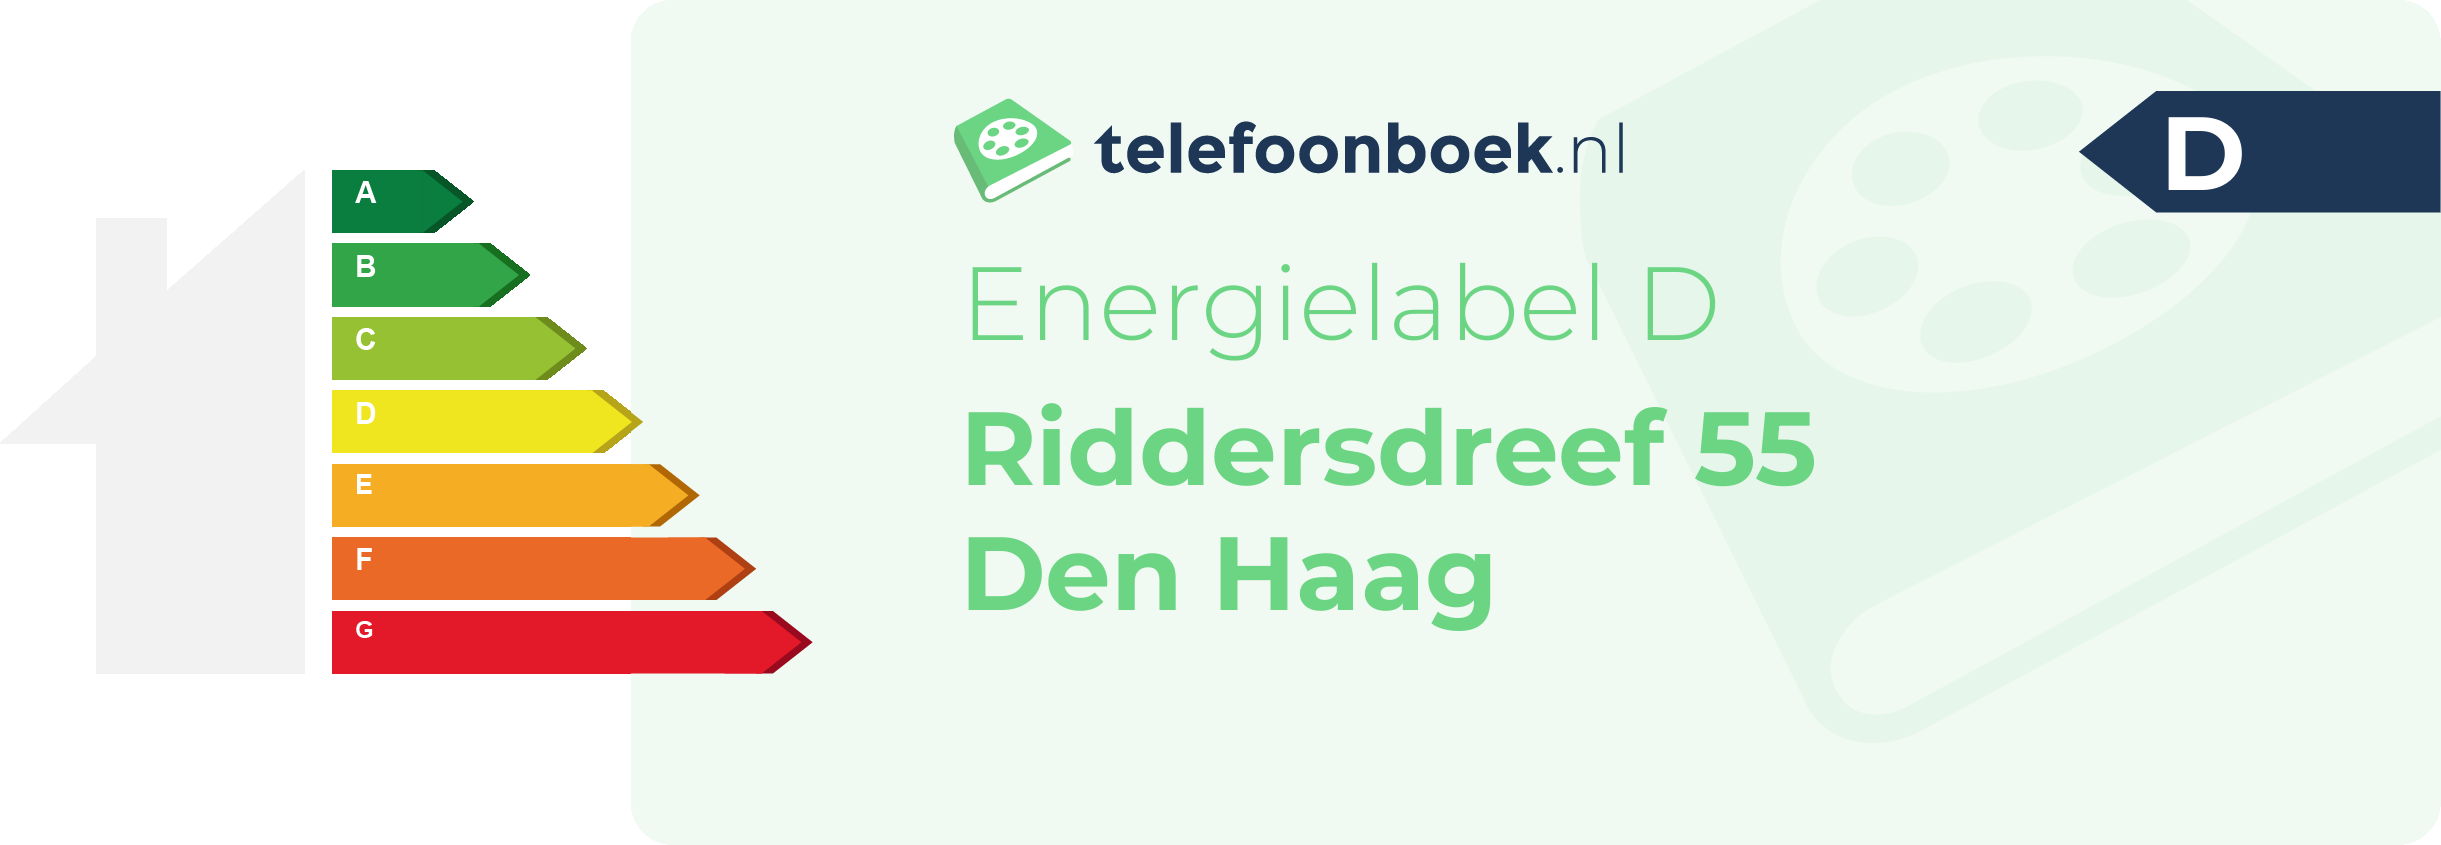 Energielabel Riddersdreef 55 Den Haag